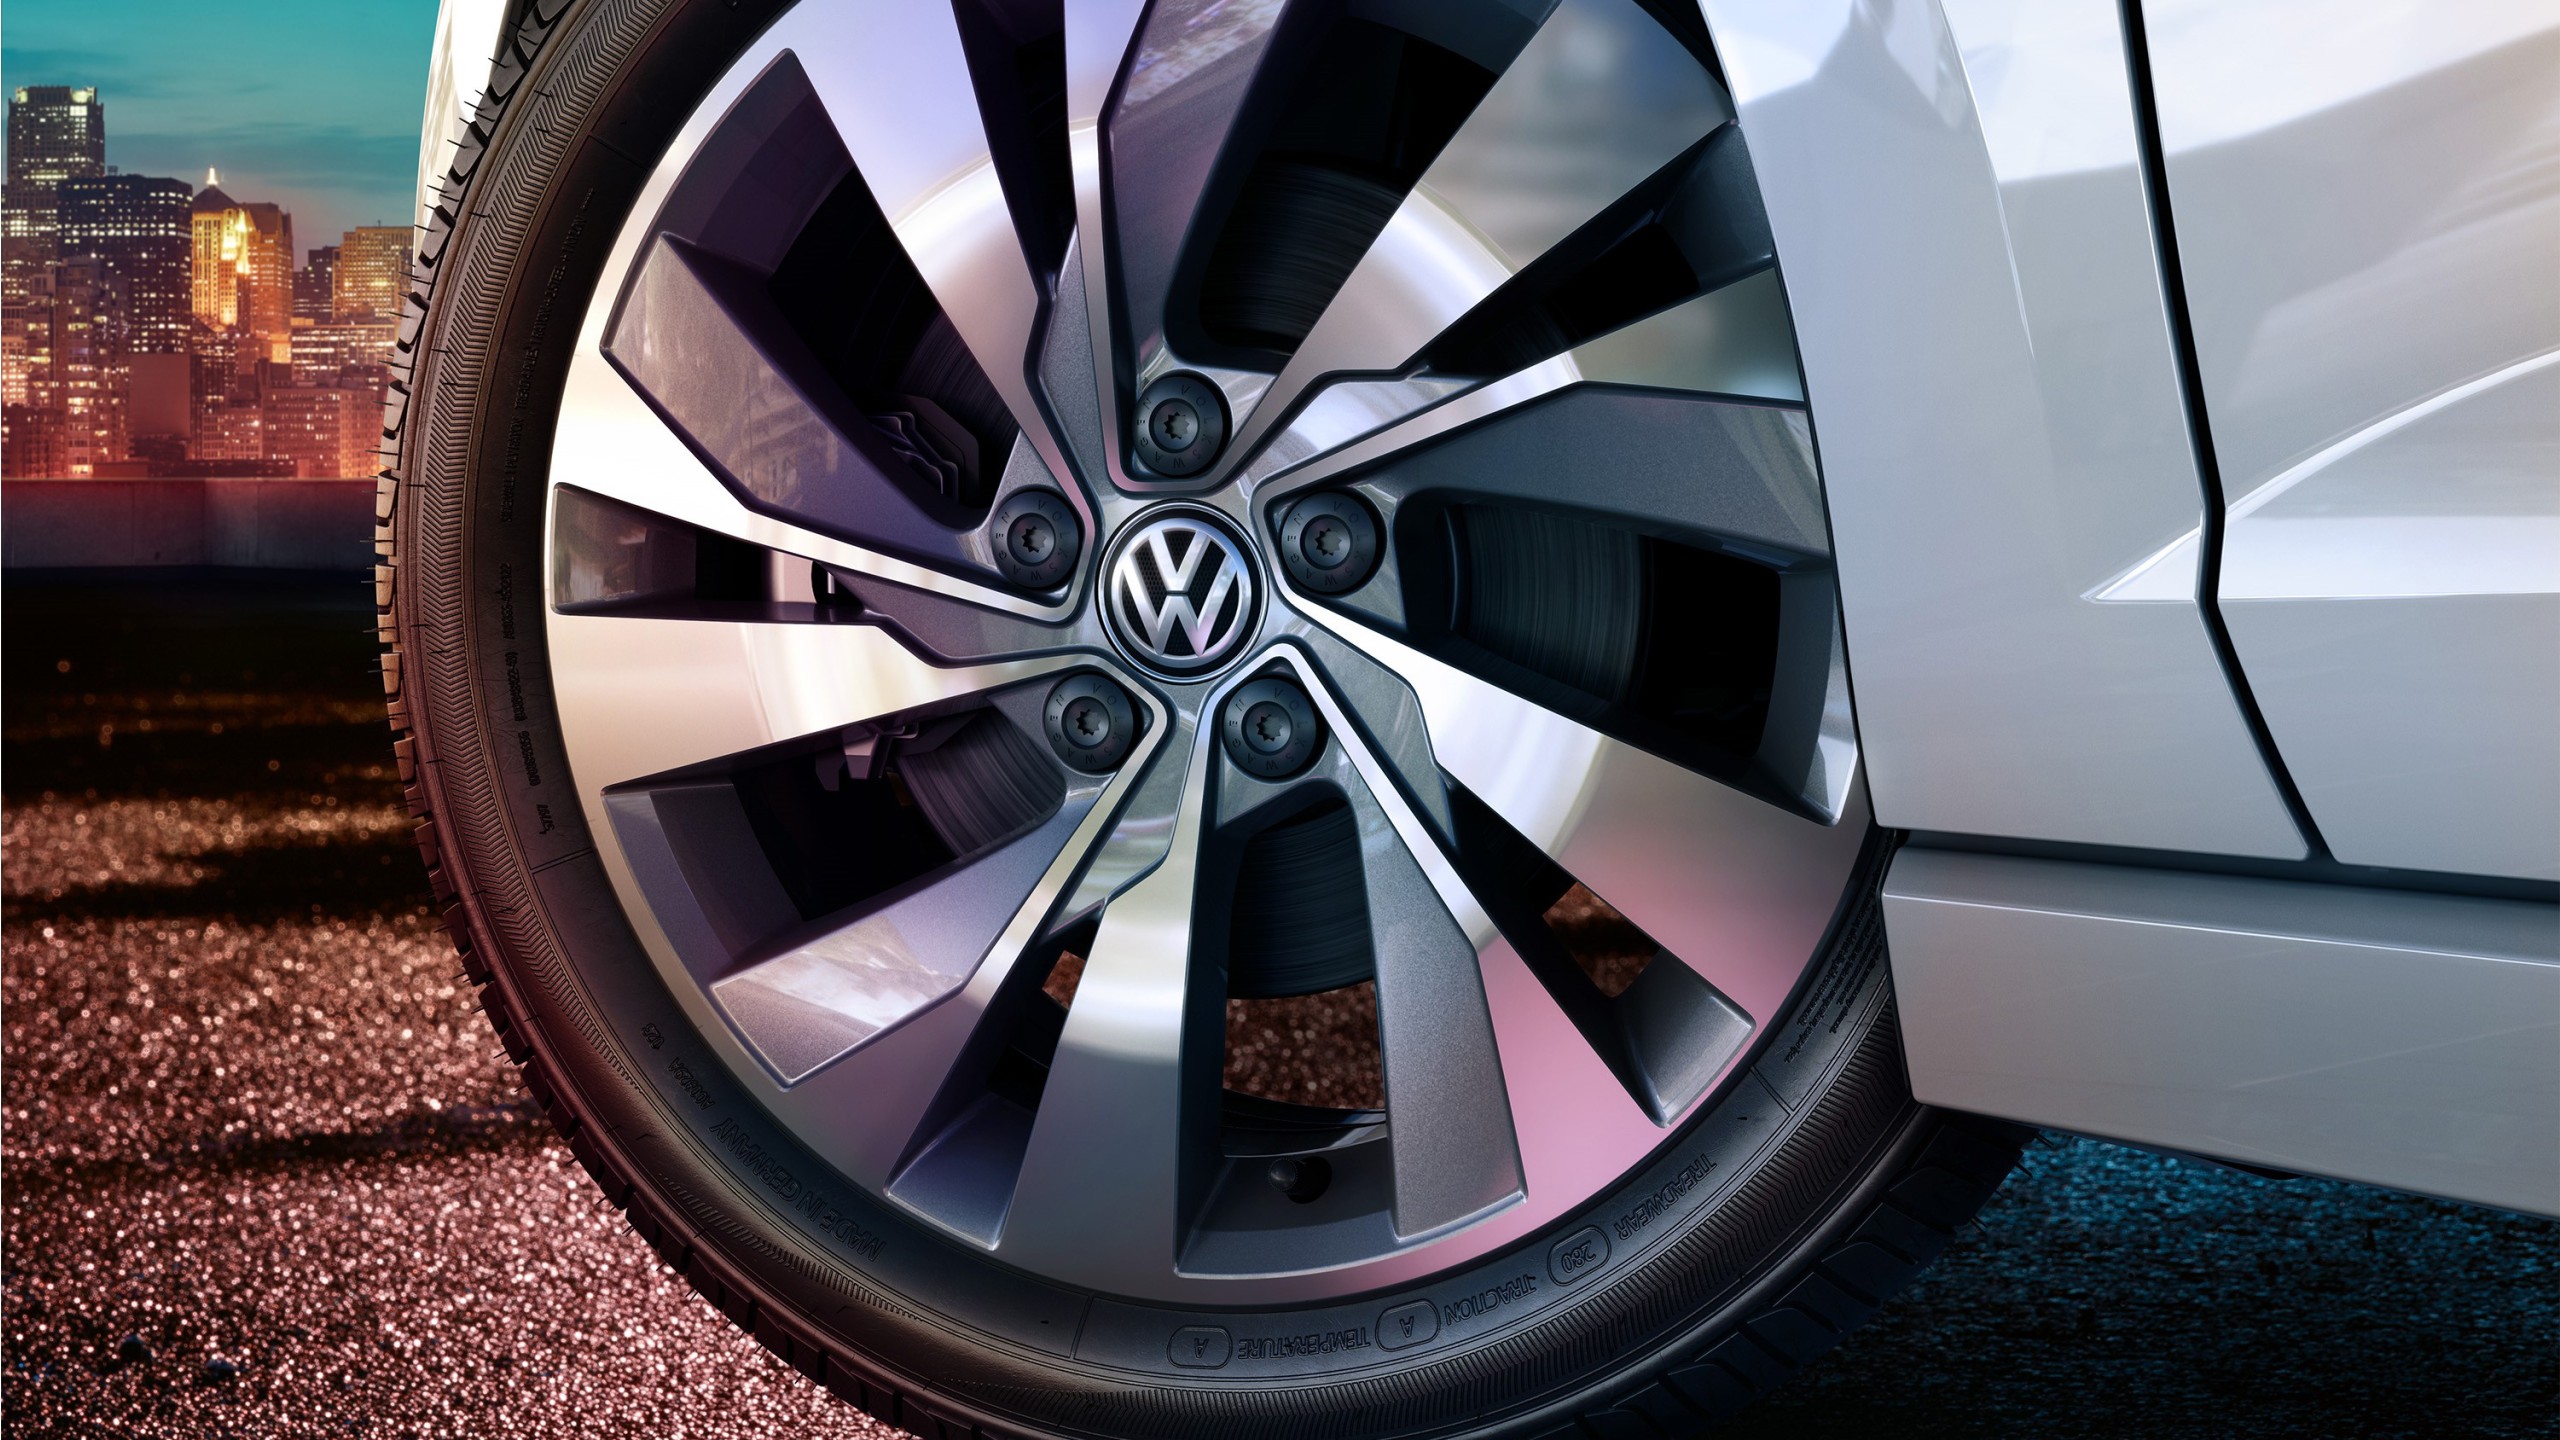 Volkswagen Polo Alloy Wheel Design Wallpaper | HD Car Wallpapers | ID #10954